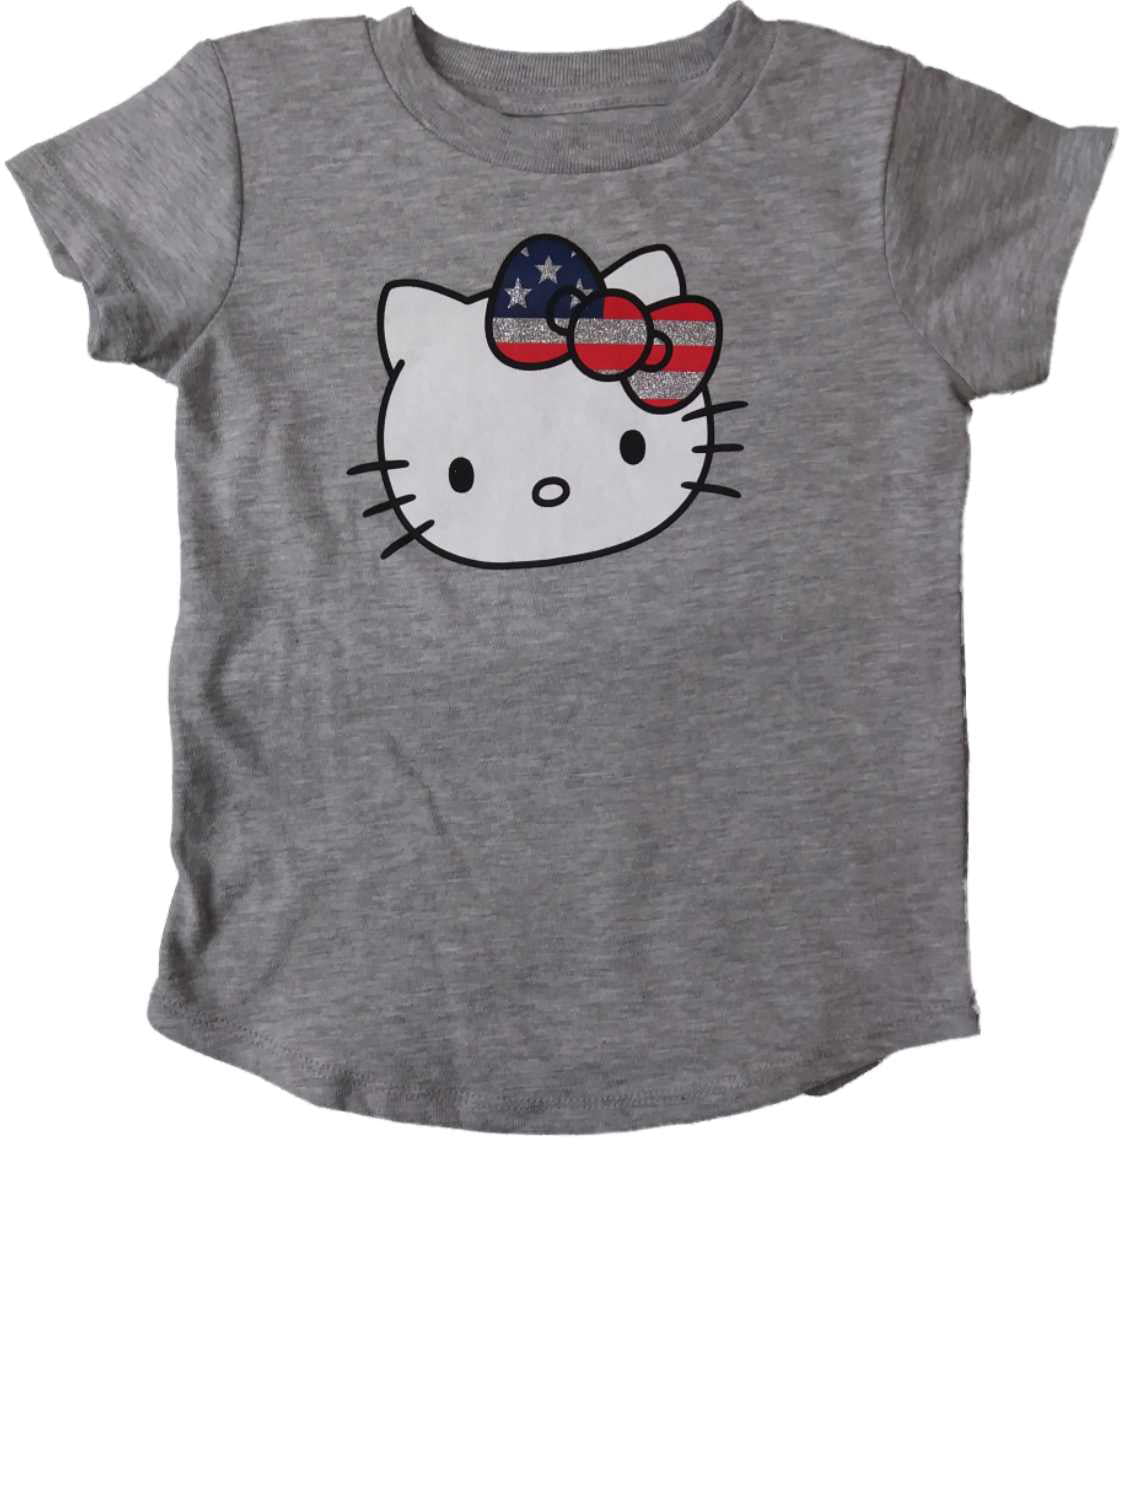 Kitten Looking at The Sky Girls Cotton Short-Sleeved T-Shirt Cartoon Cute Funny Gray 